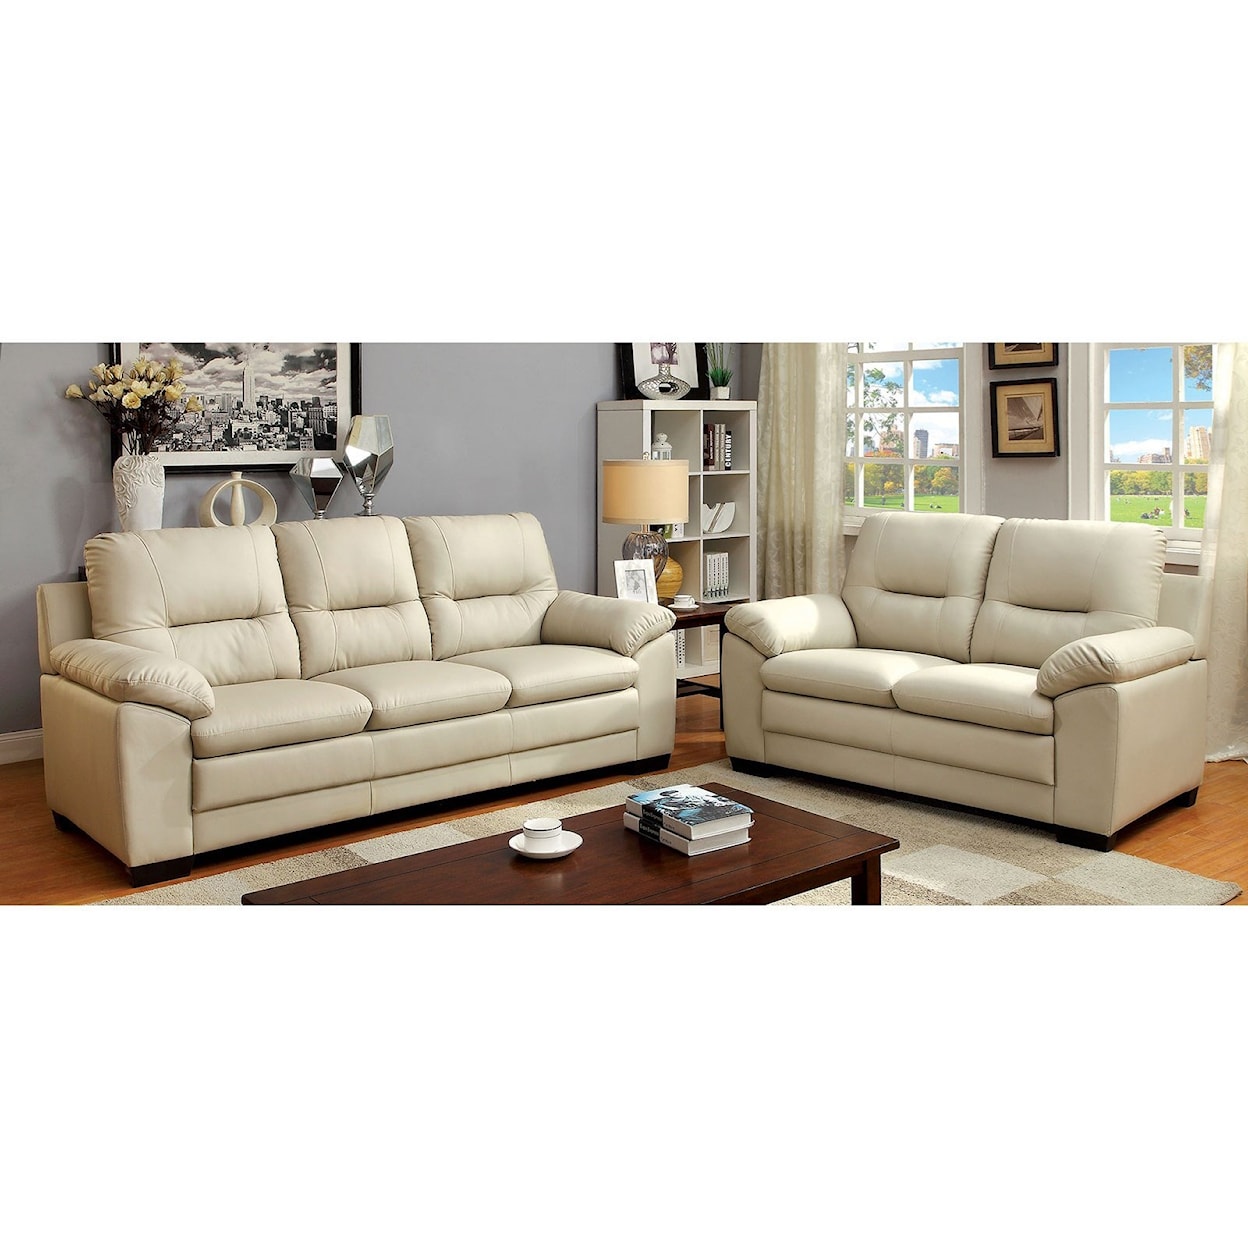 Furniture of America Parma Casual Sofa